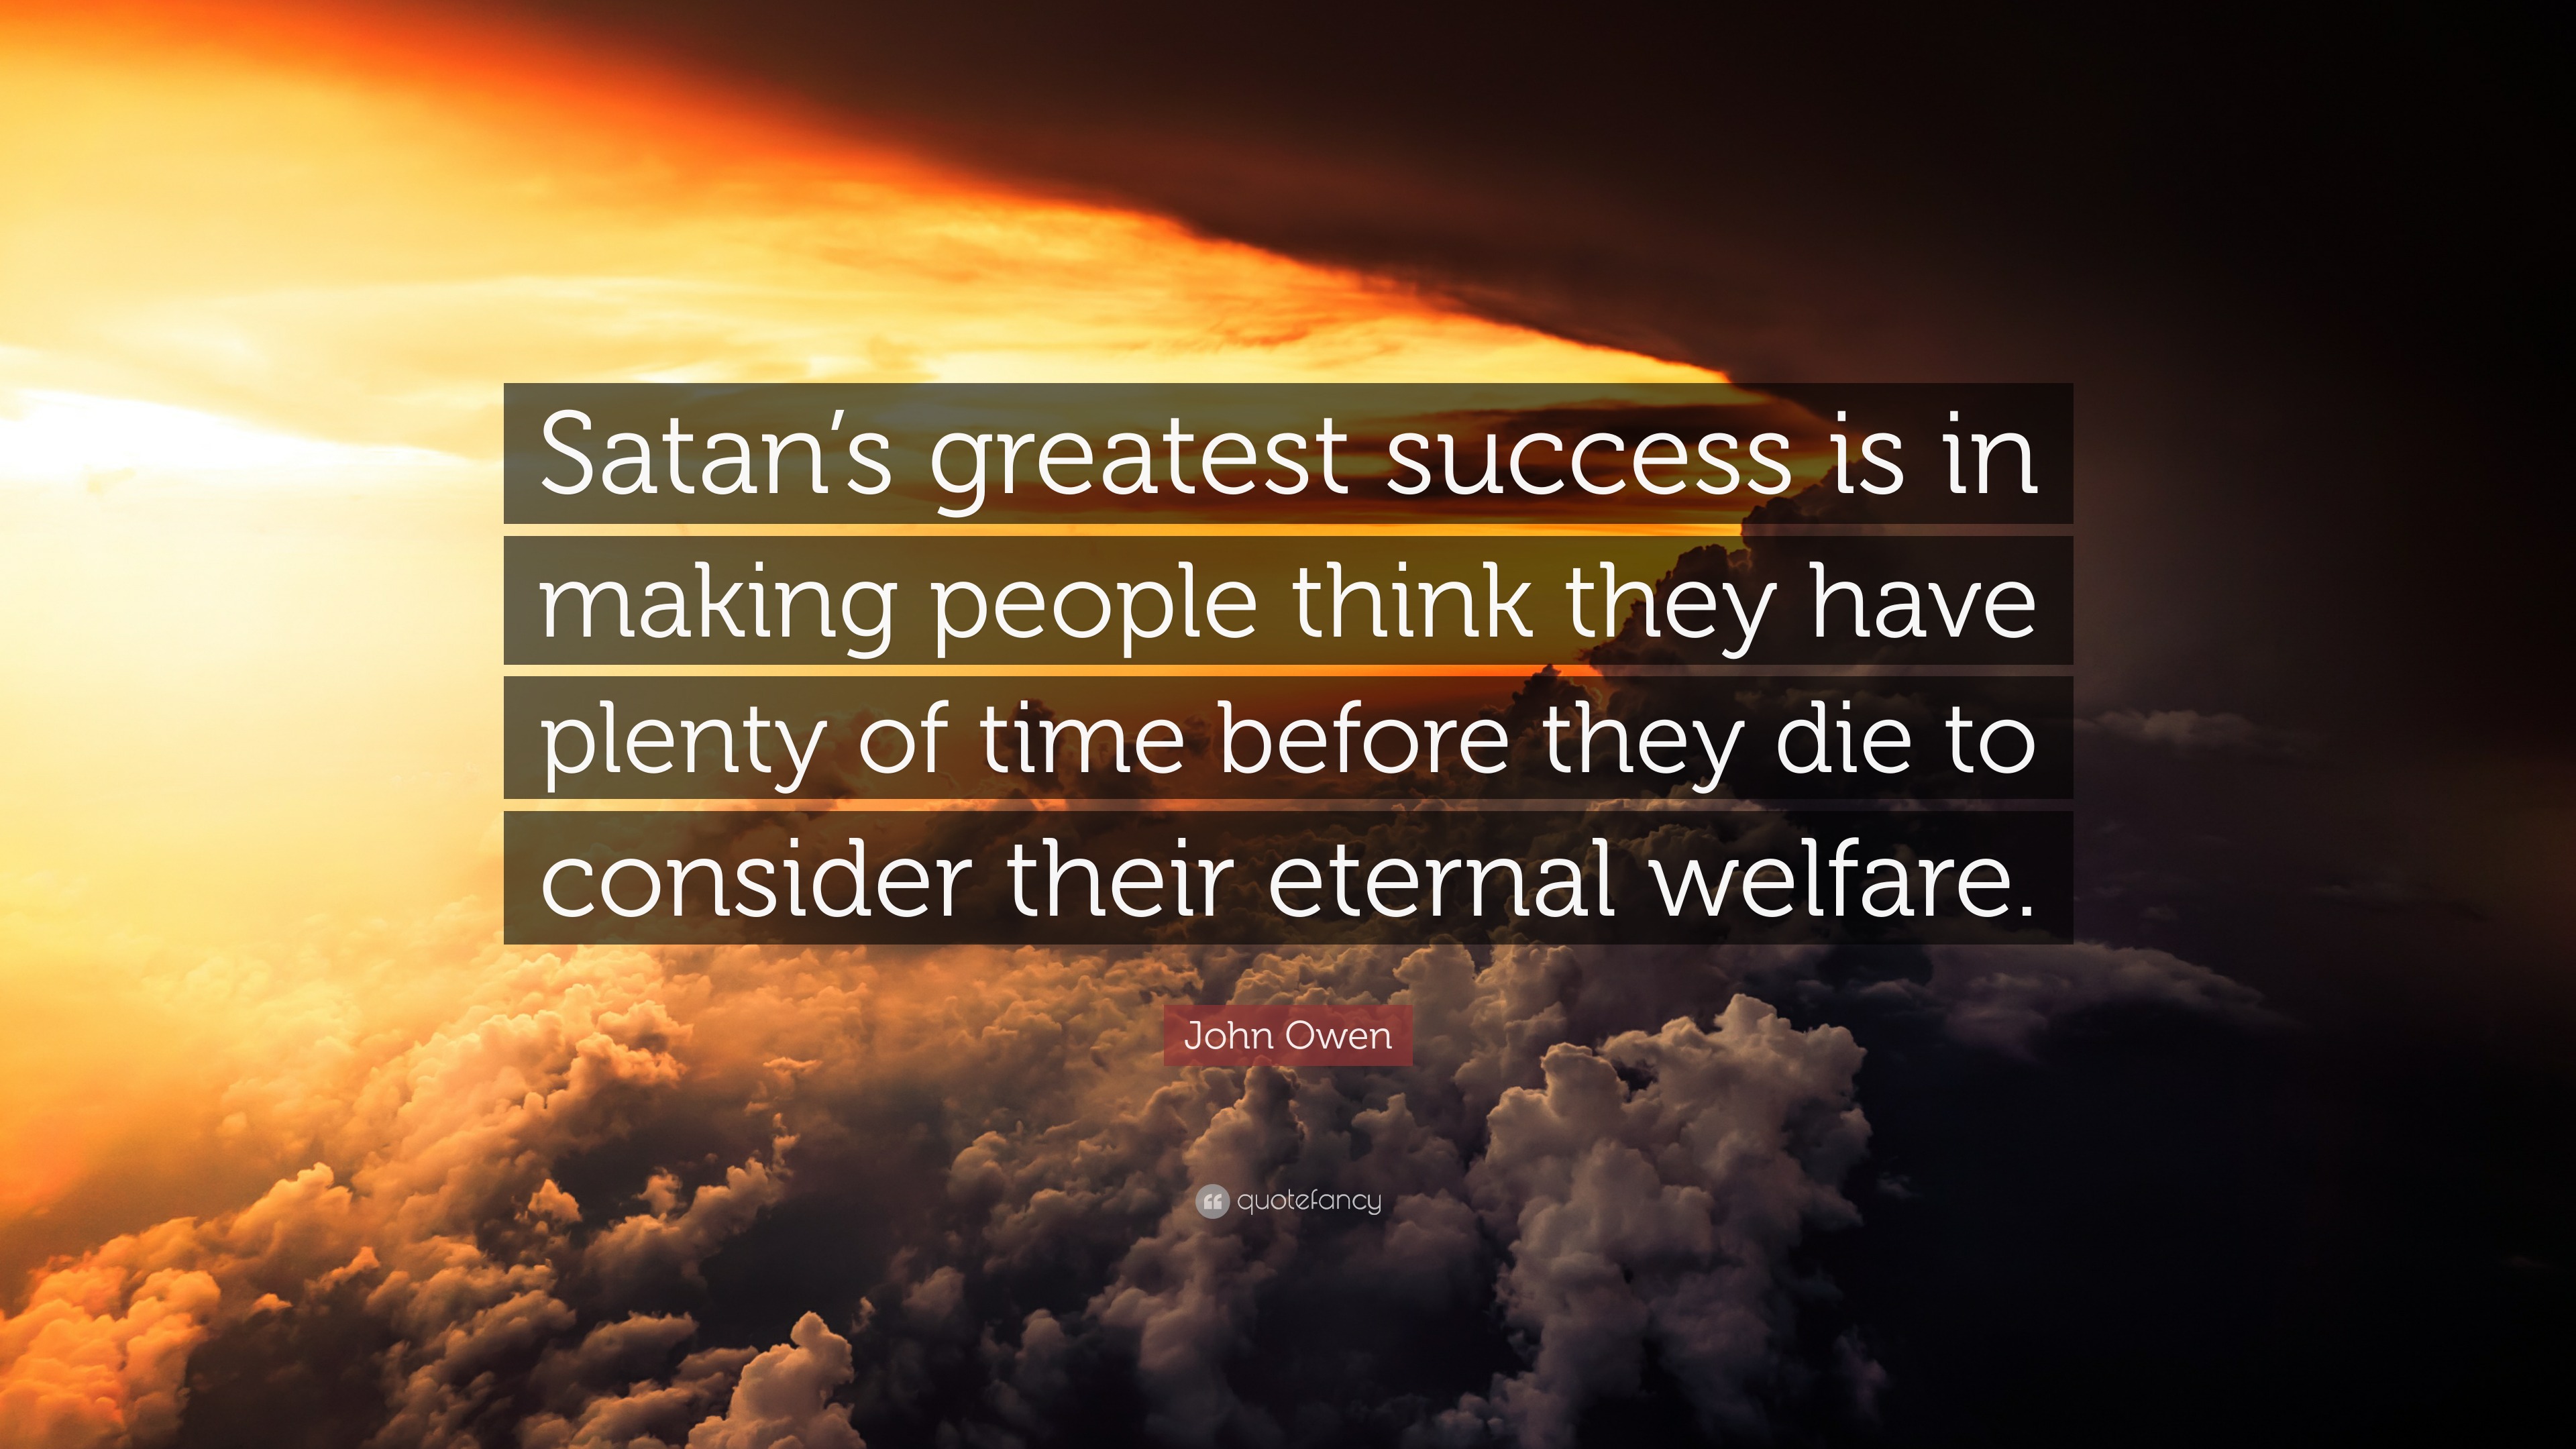 John Owen Quote: “Satan's greatest success is in making people